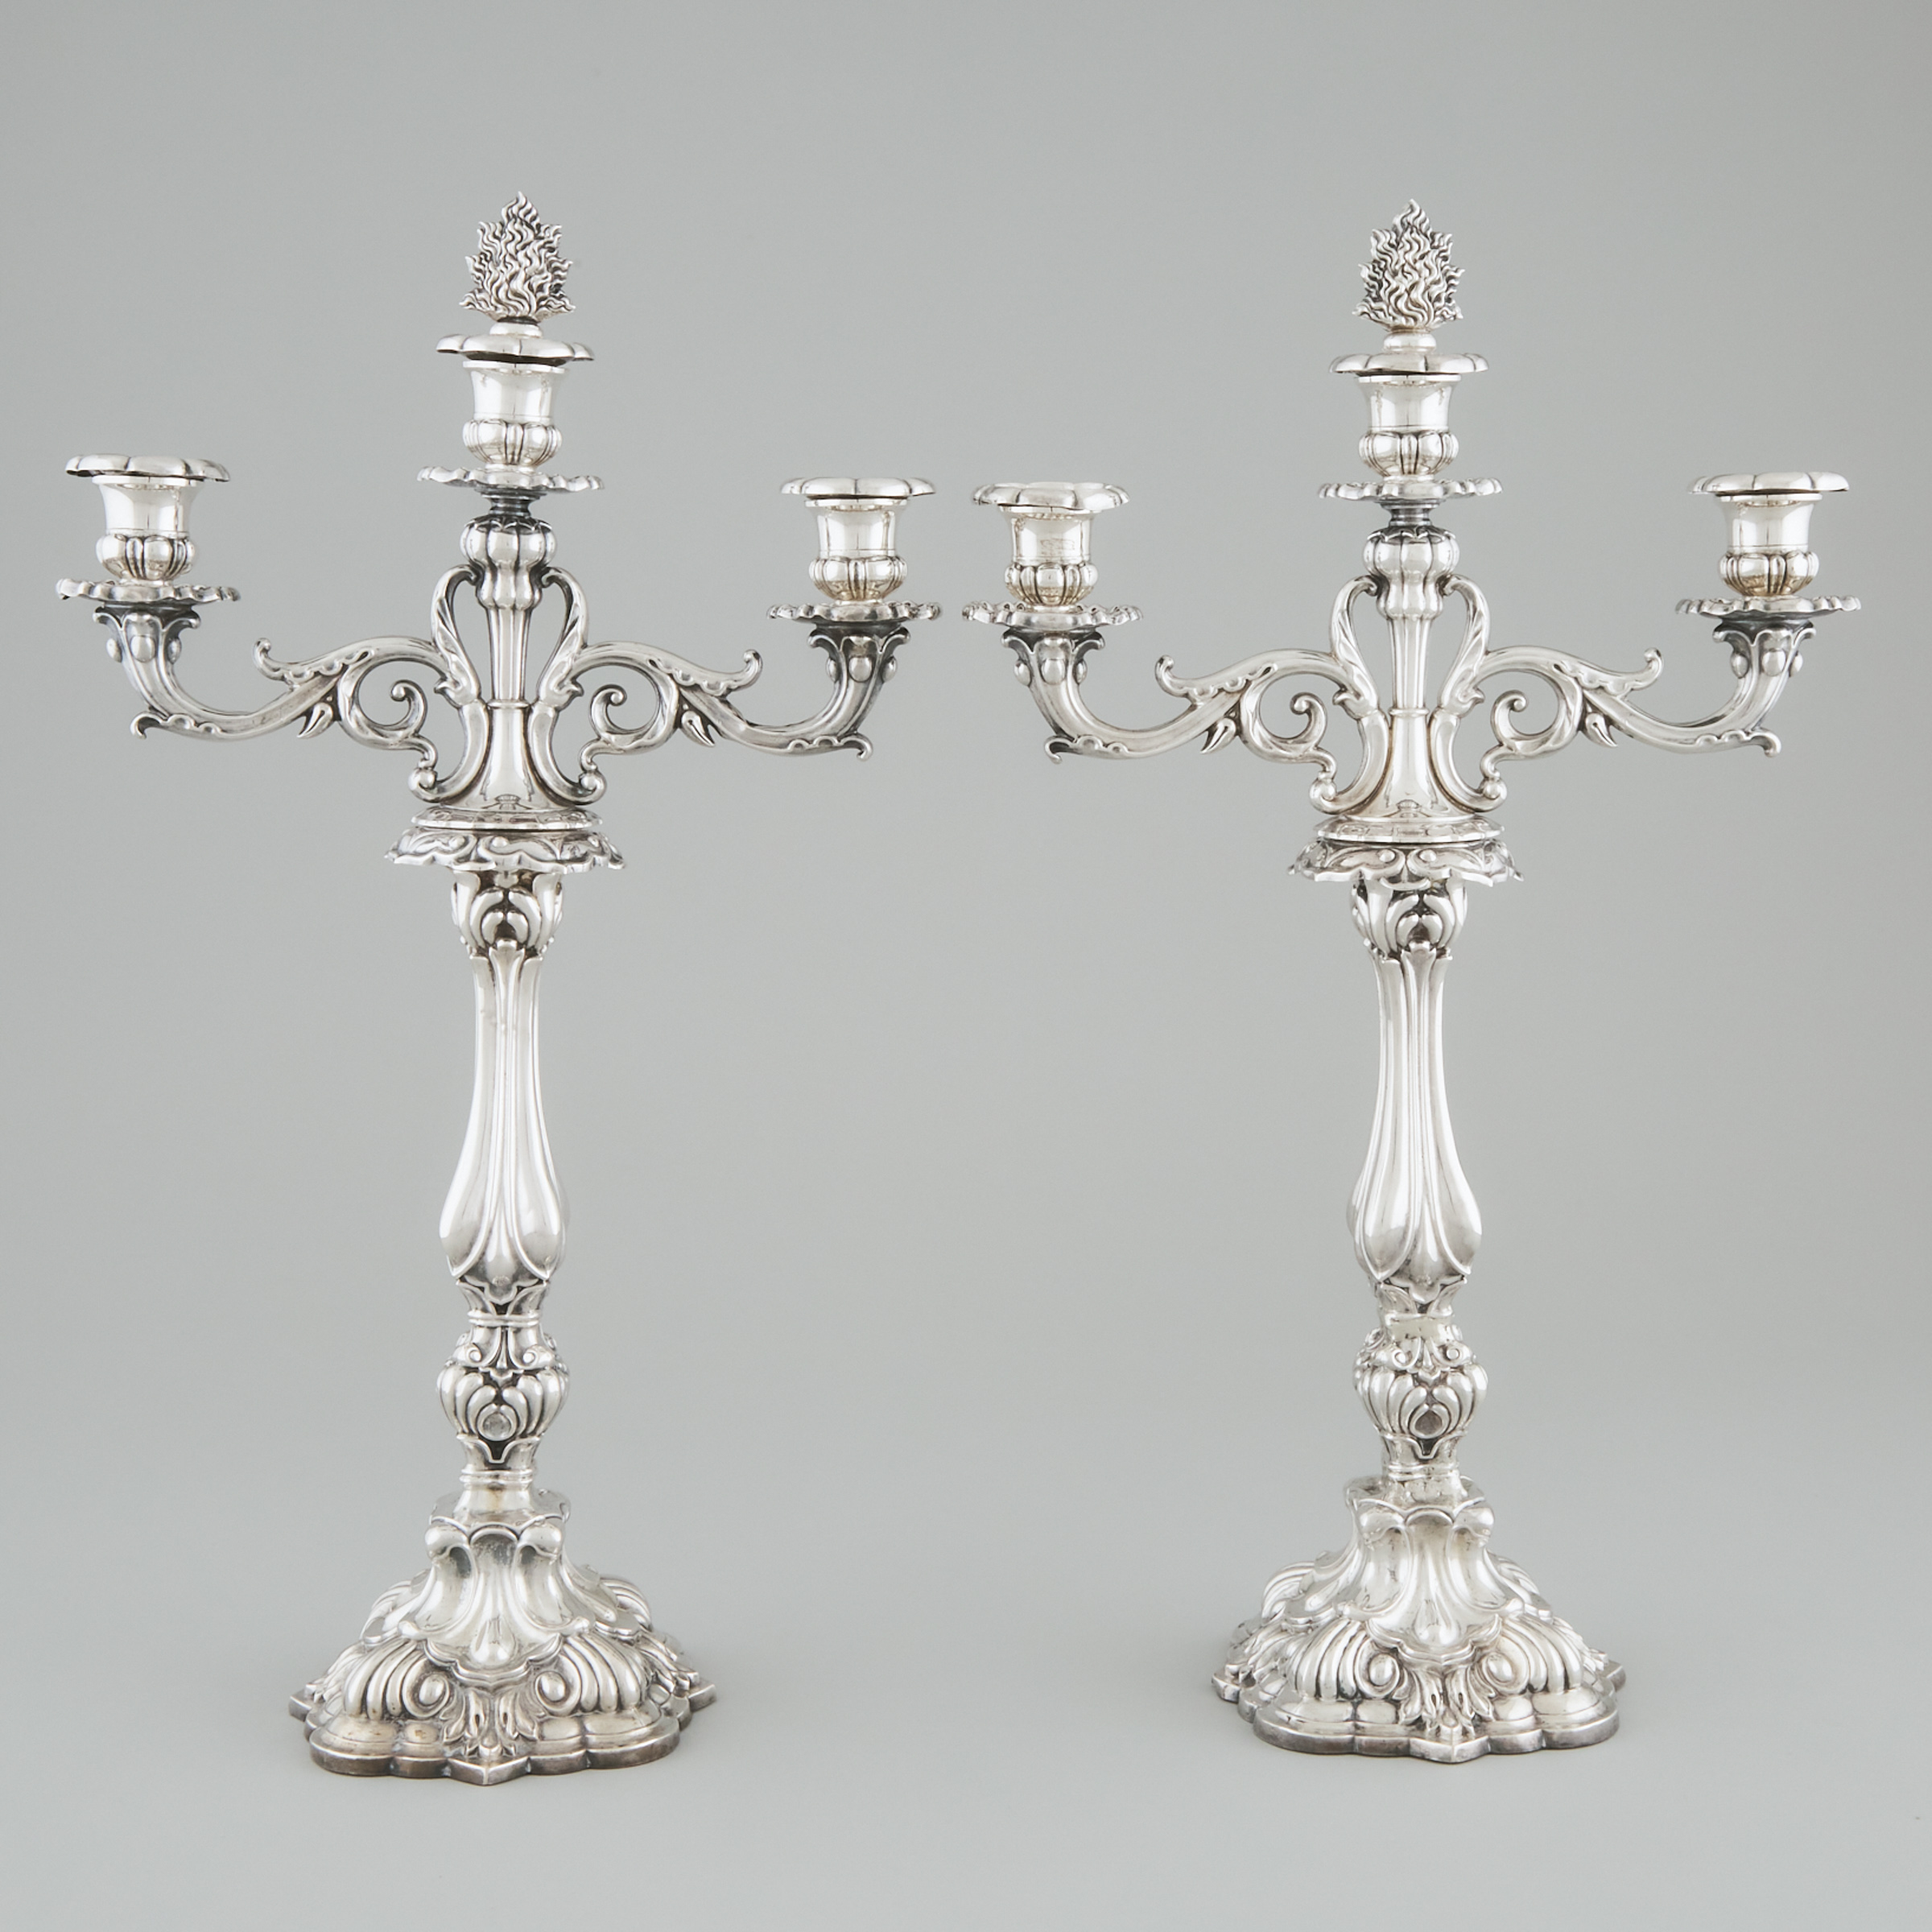 Pair of German Silver Three-Light Candelabra, Meyrhofer, Munich, 1852